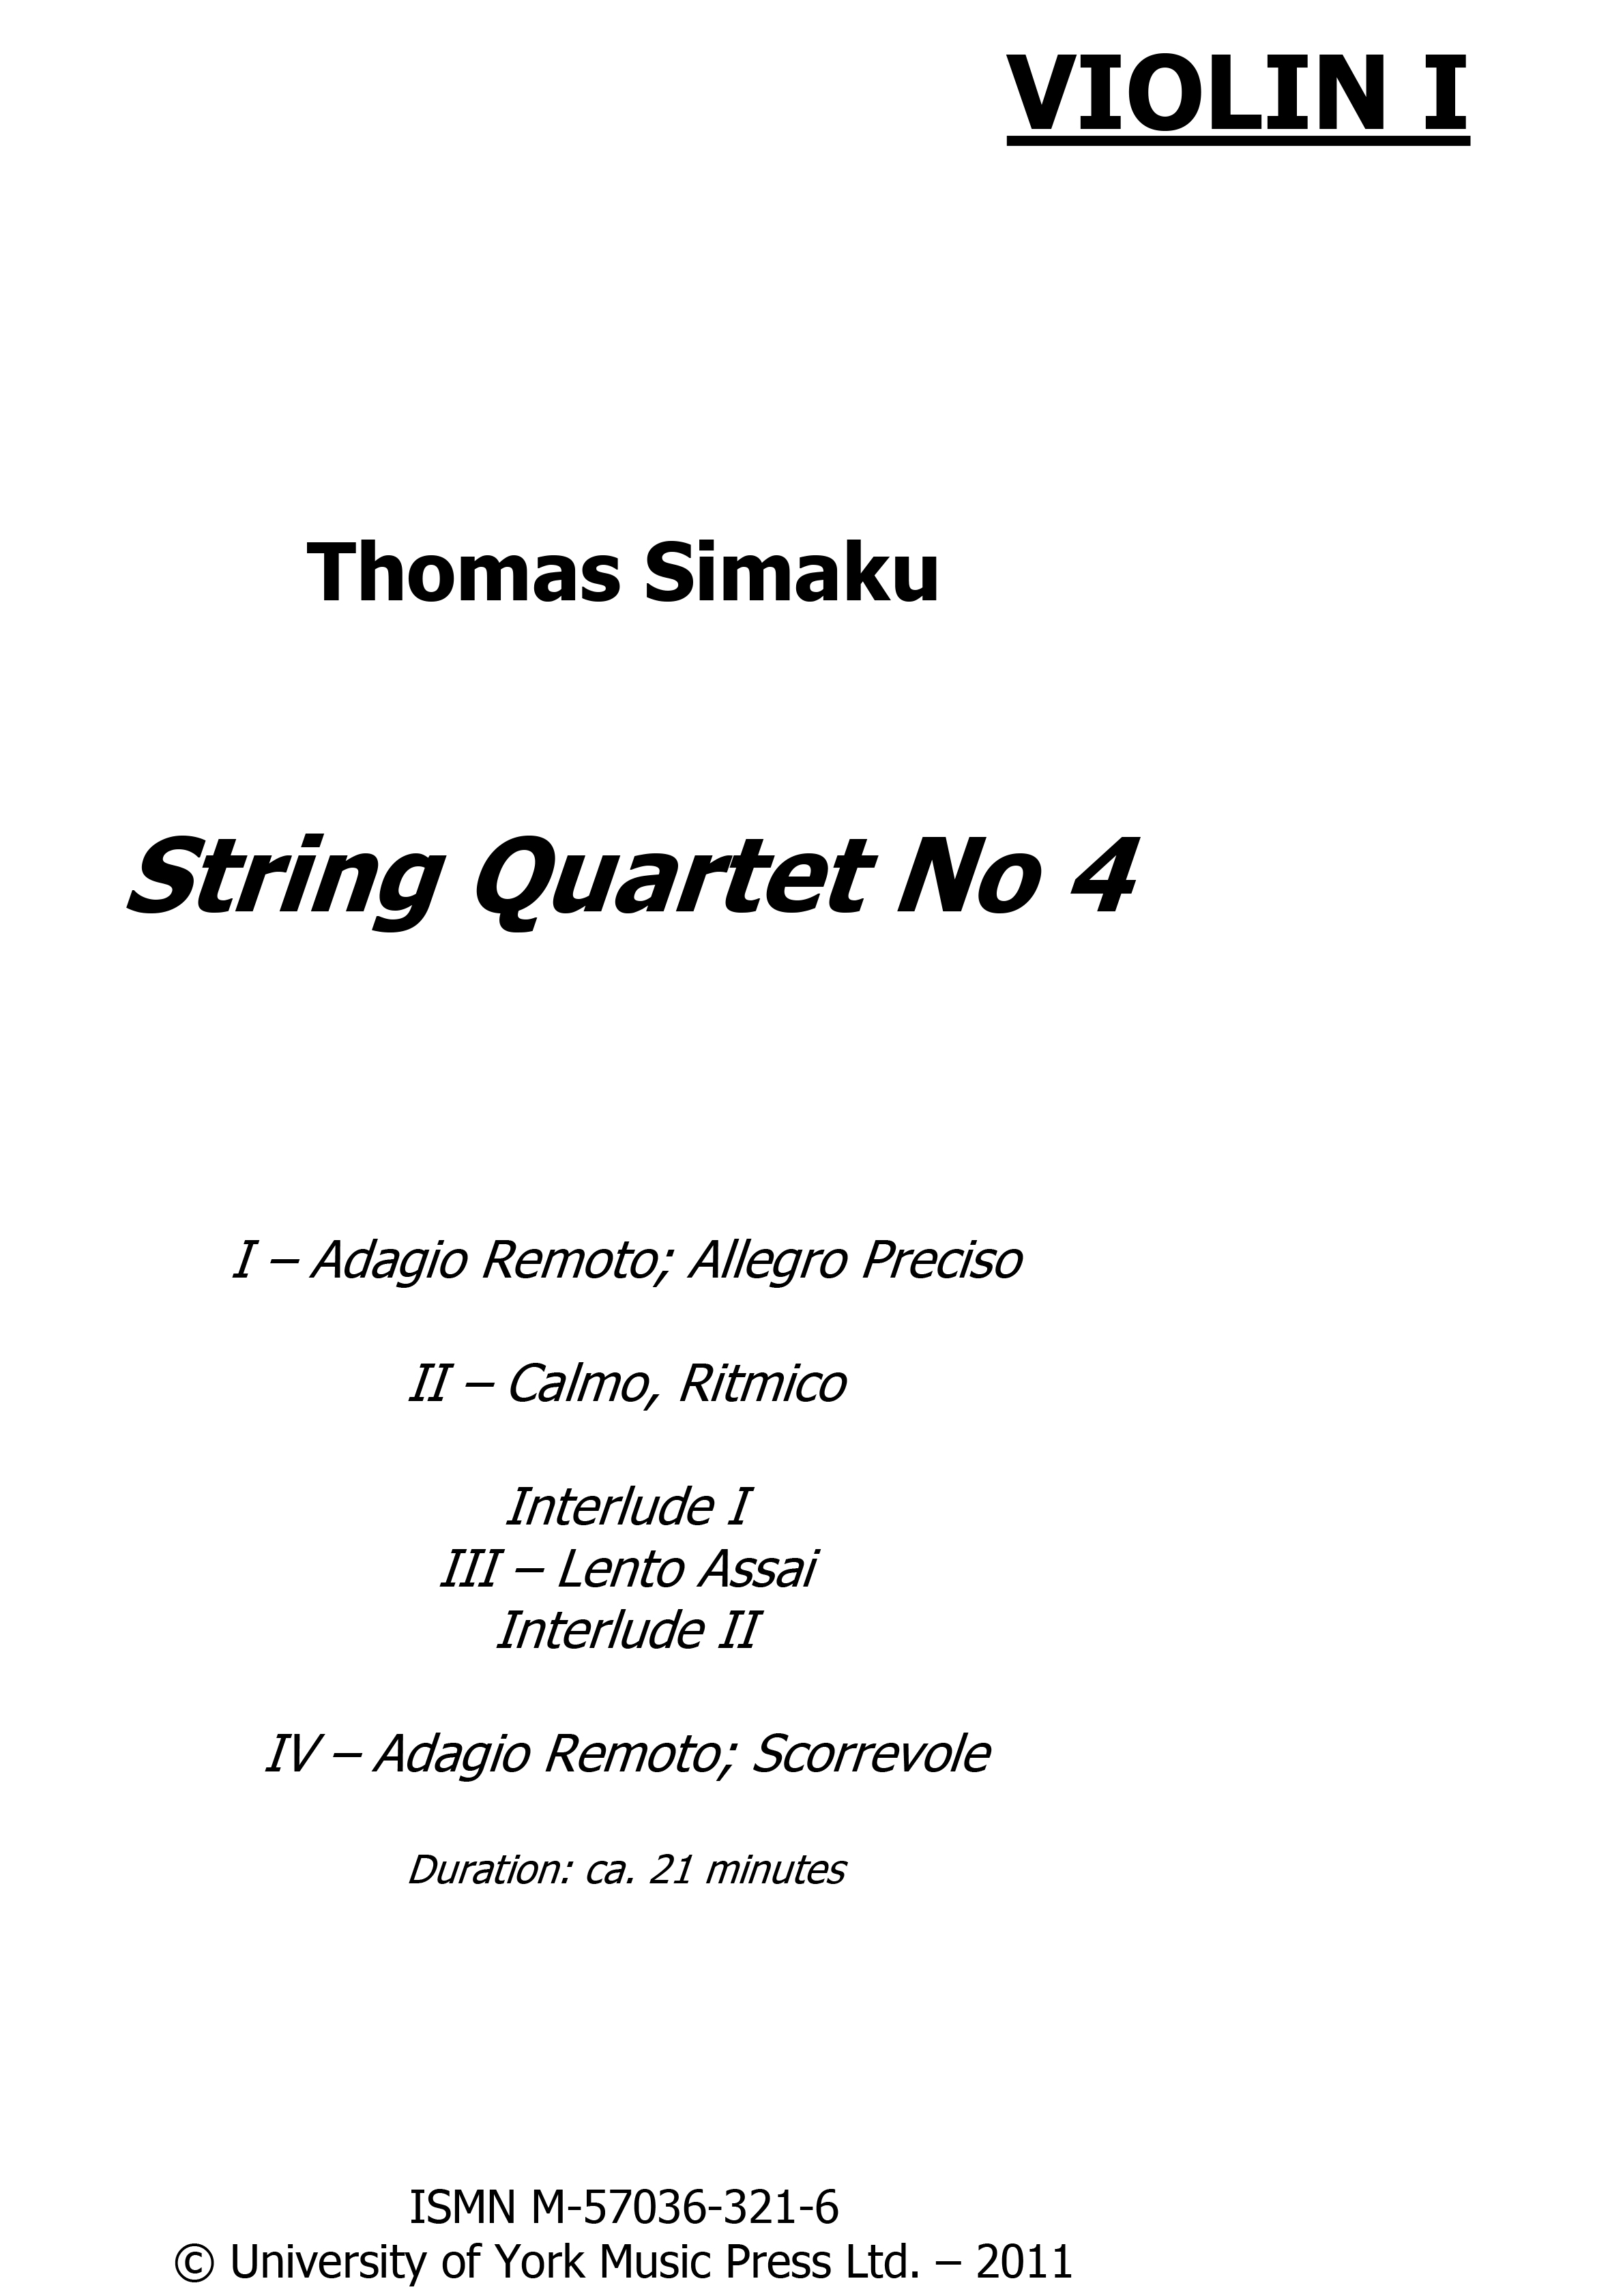 Thomas Simaku: String Quartet No. 4 - Parts: String Quartet: Score and Parts